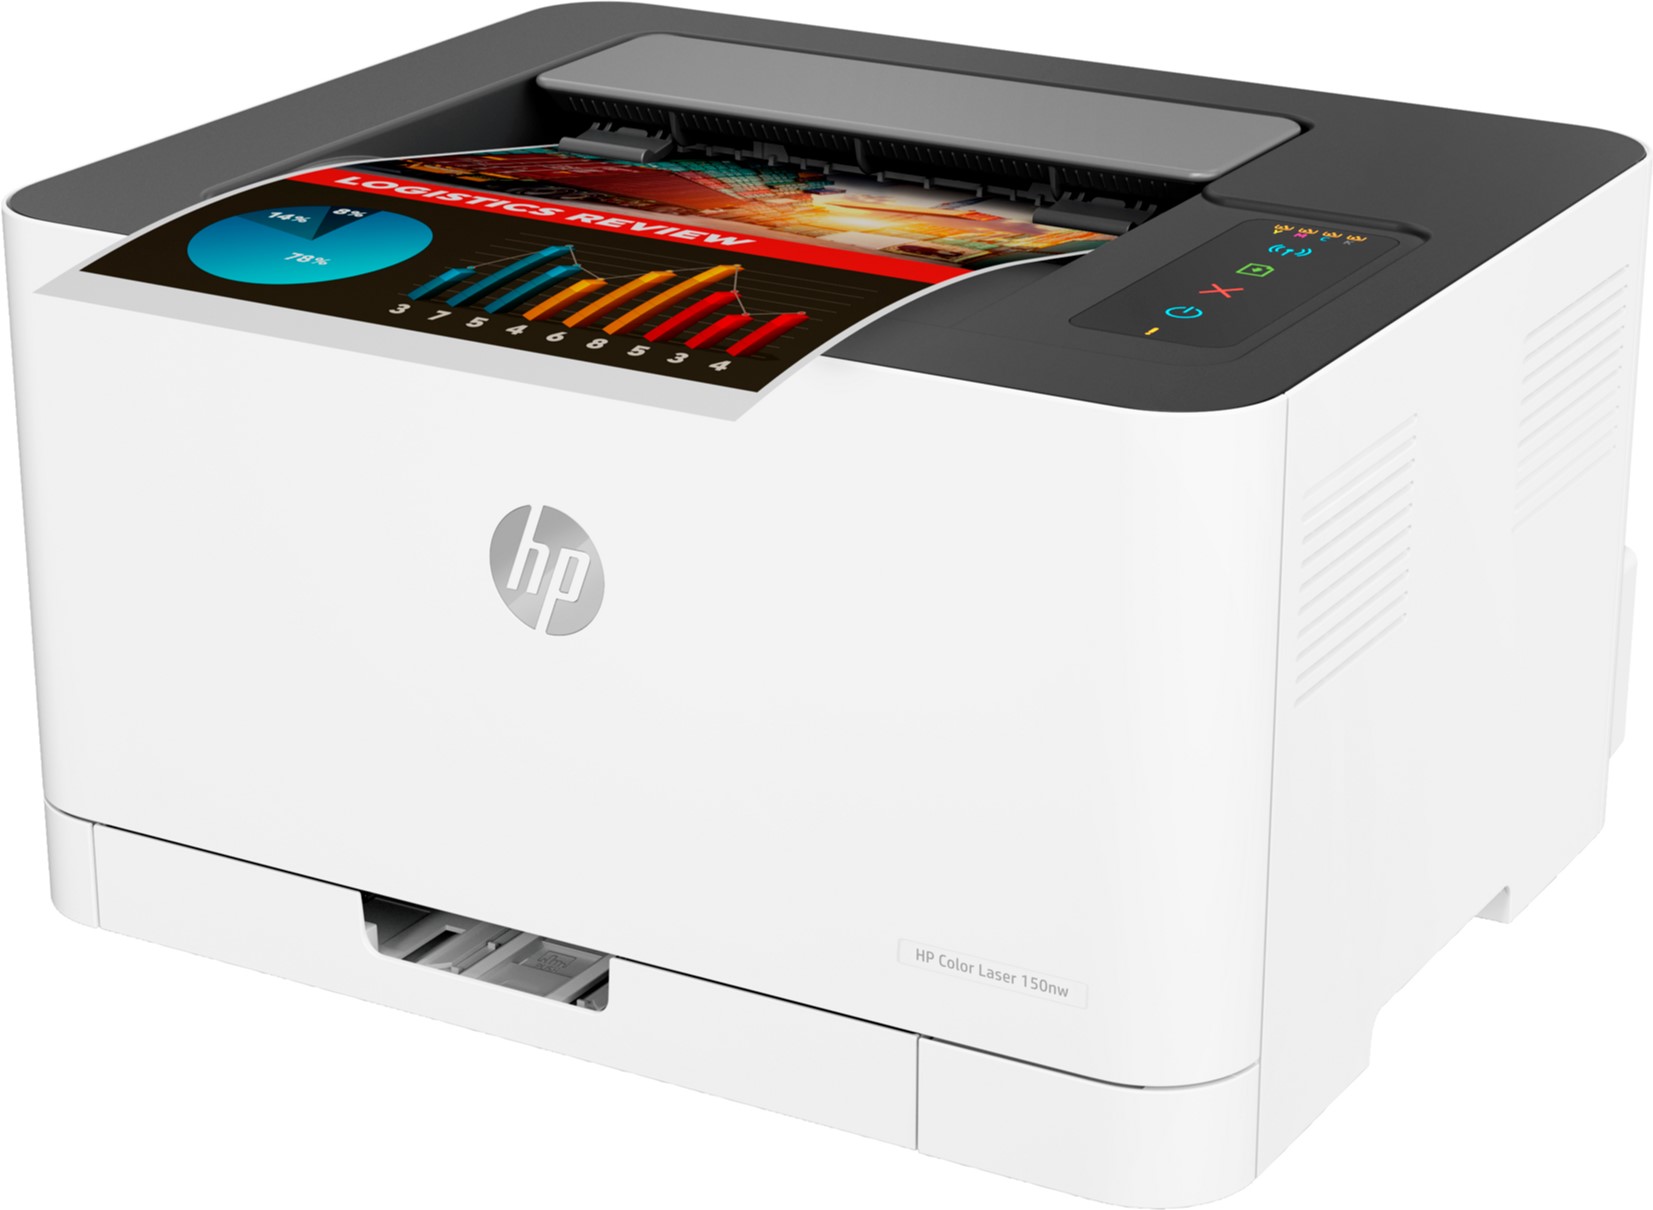 Прошивка HP Color Laser 150NW